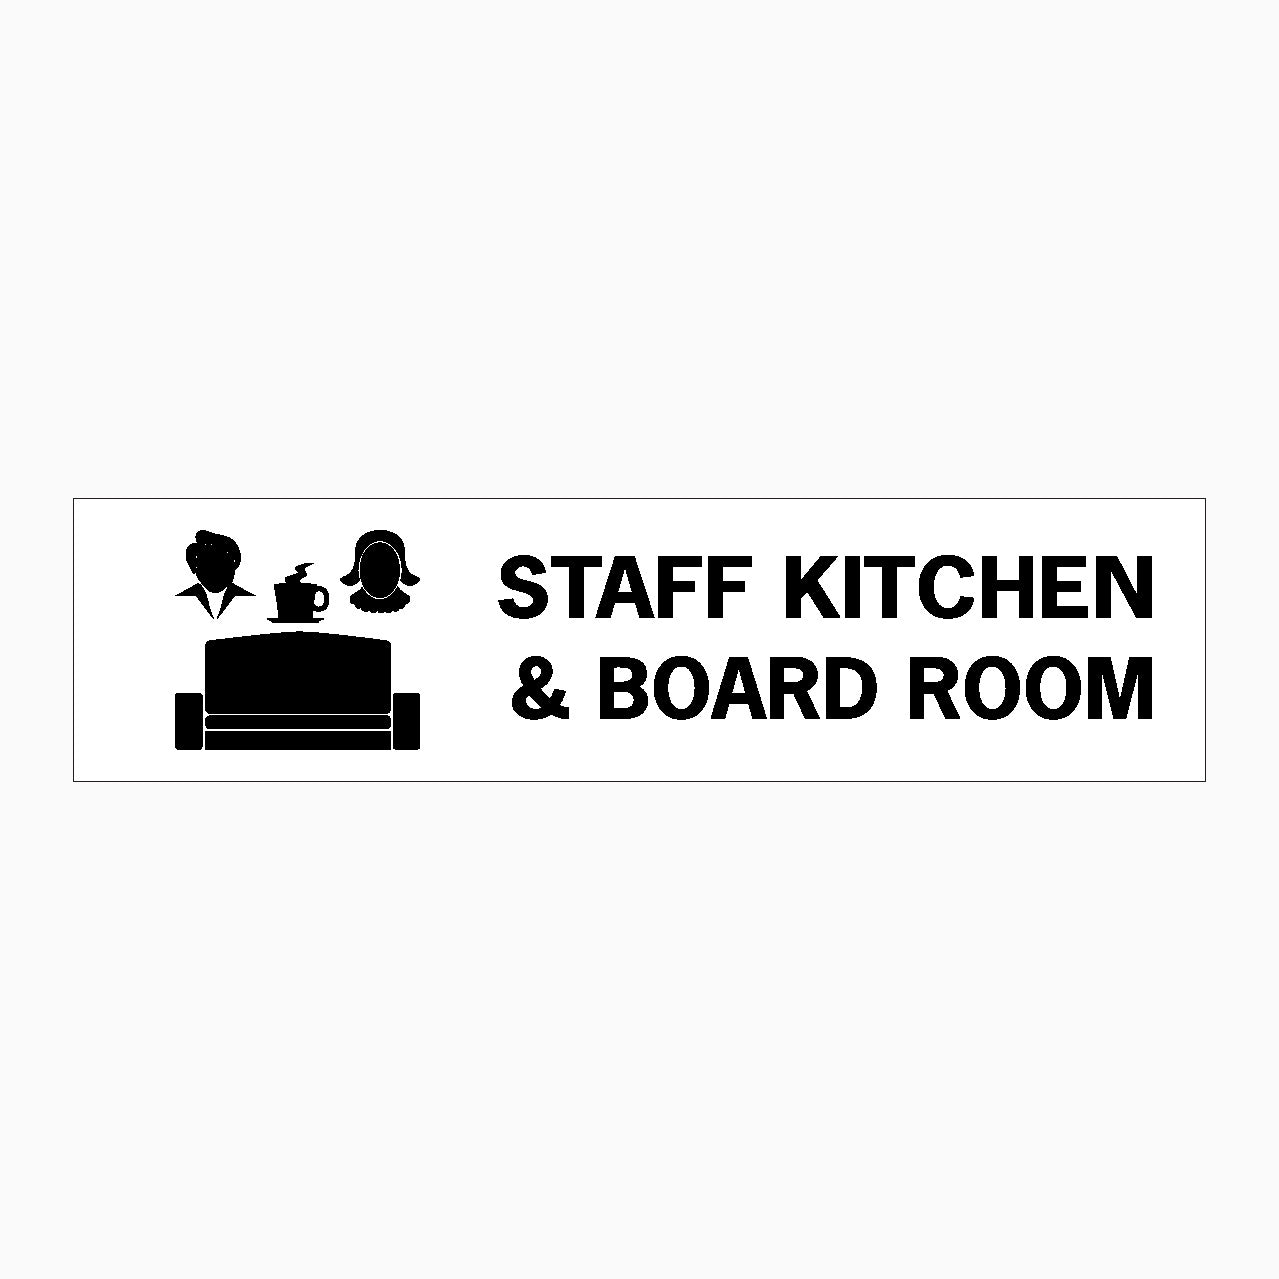 STAFF KITCHEN & BOARD ROOM SIGN